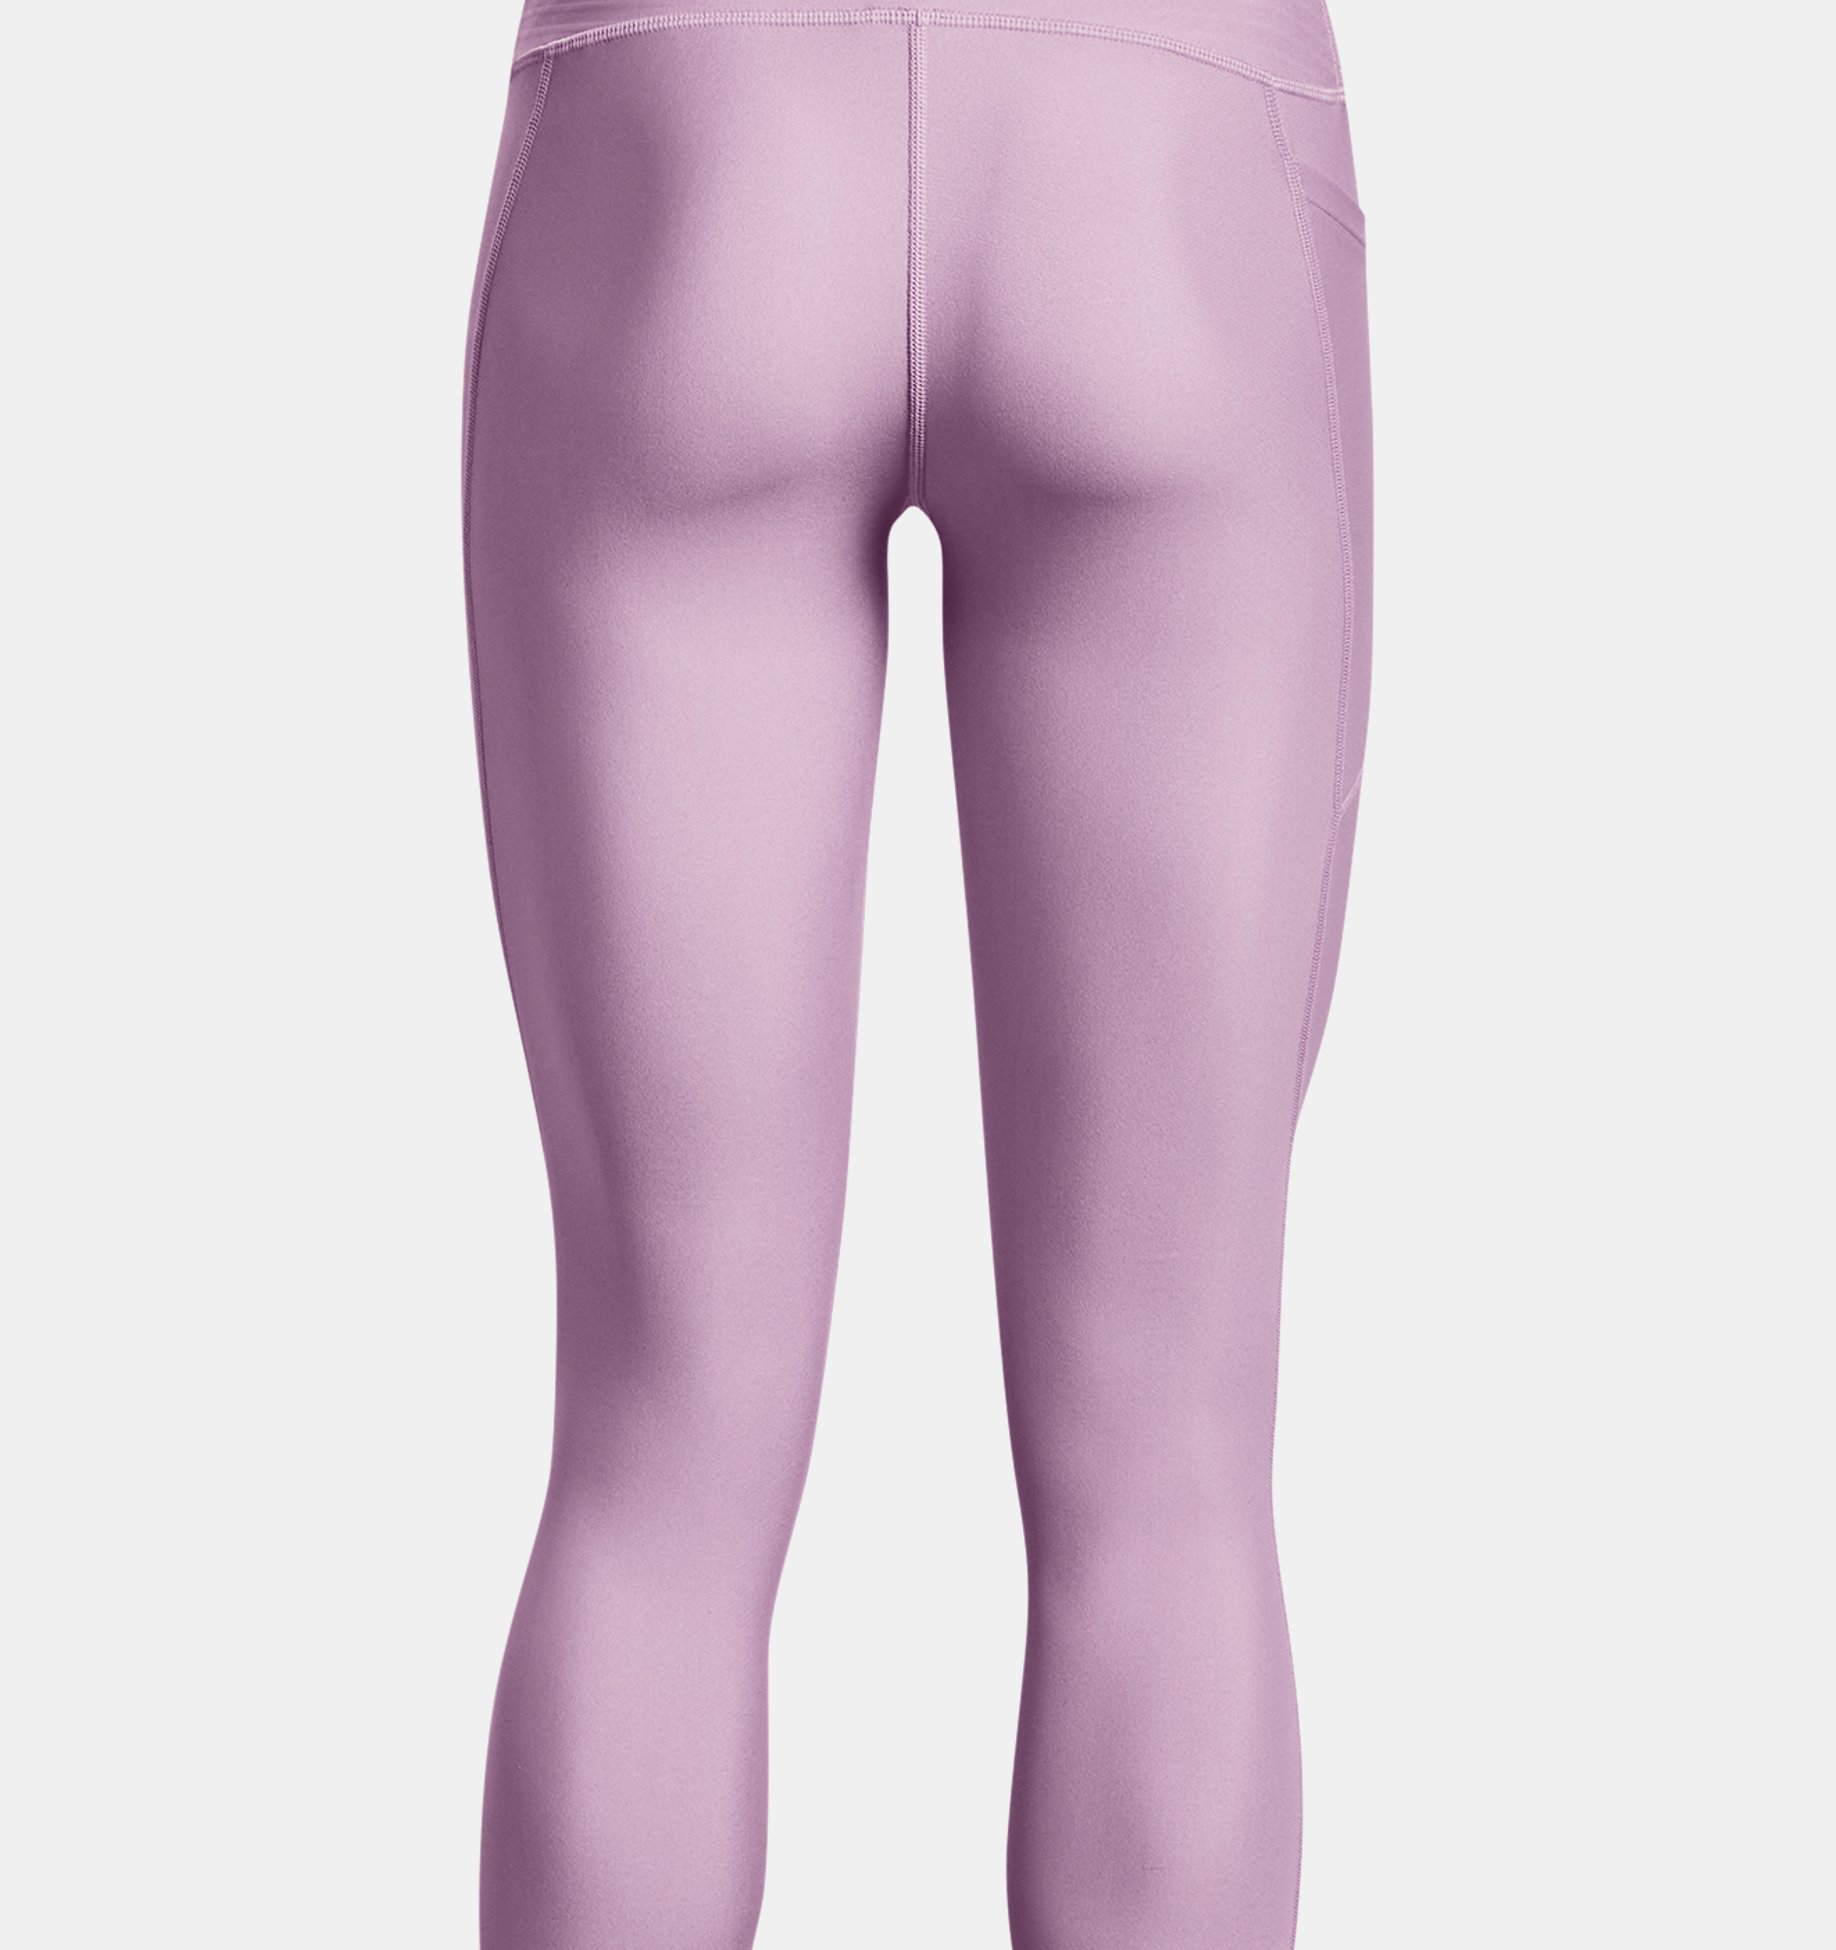 Women's leggings Under Armour Women's HeatGear No-Slip Waistband Printed  Ankle Leggings - posh pink/tux purple, Tennis Zone